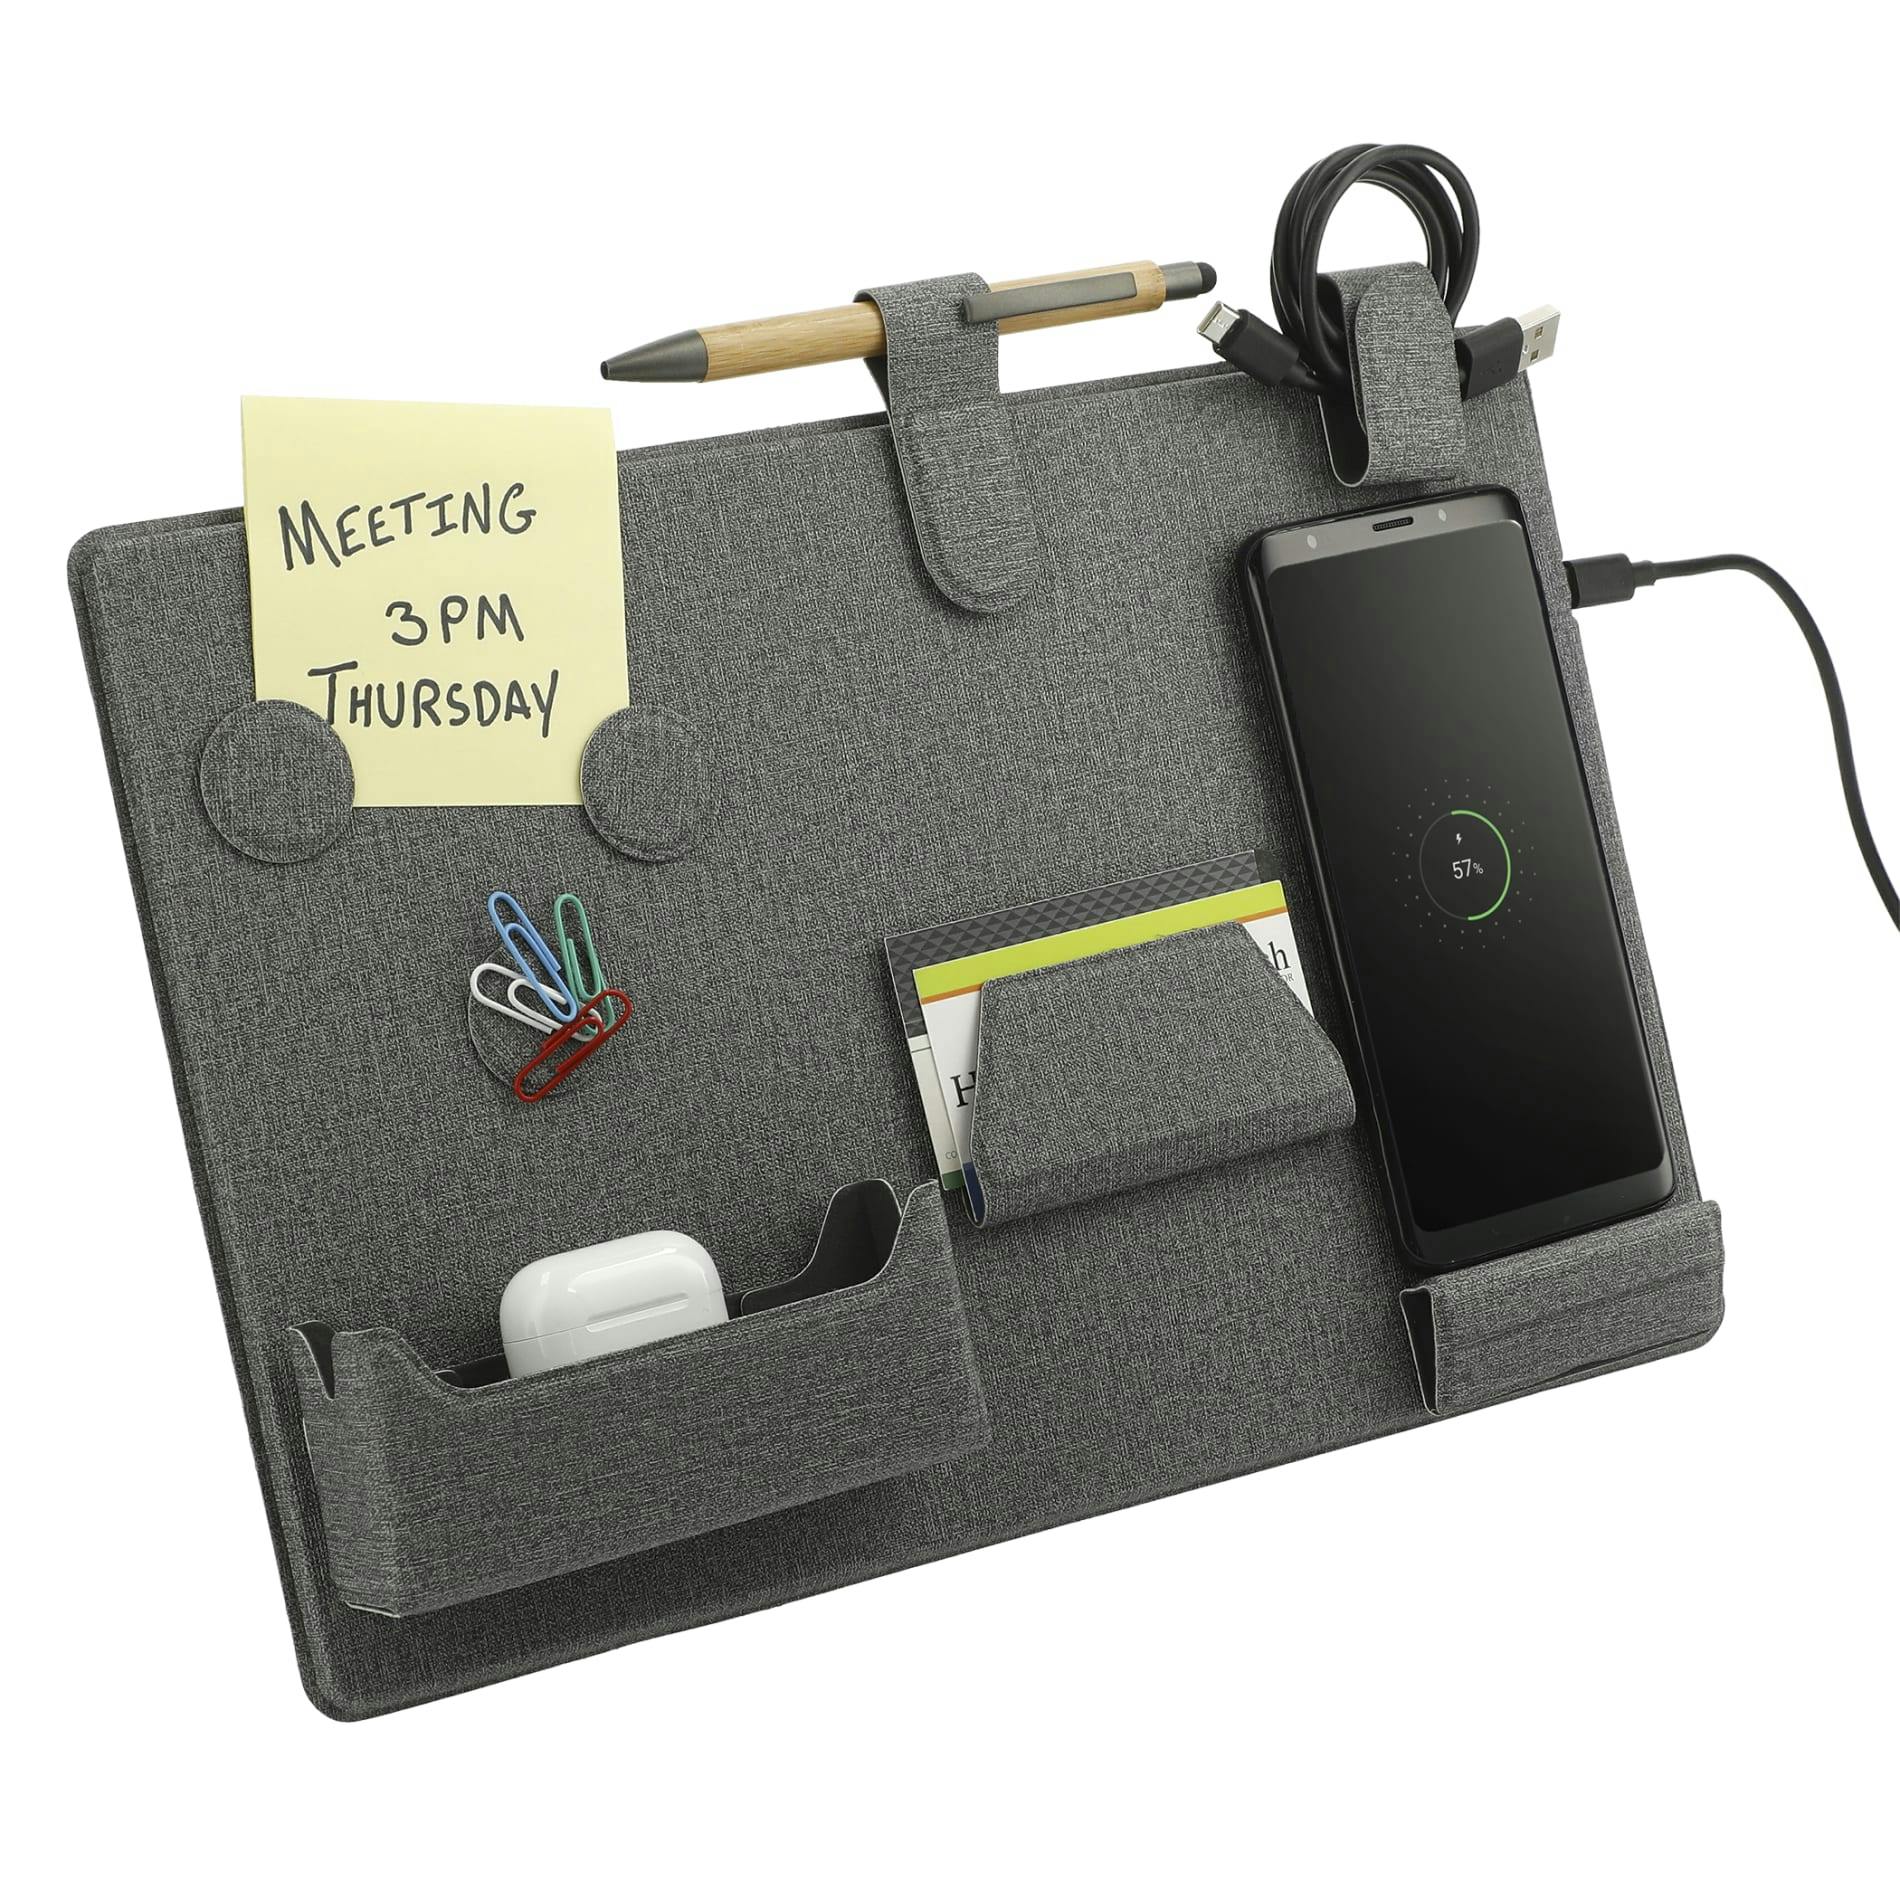 MagClick™ Fast Wireless Charging Desk Organizer - additional Image 7